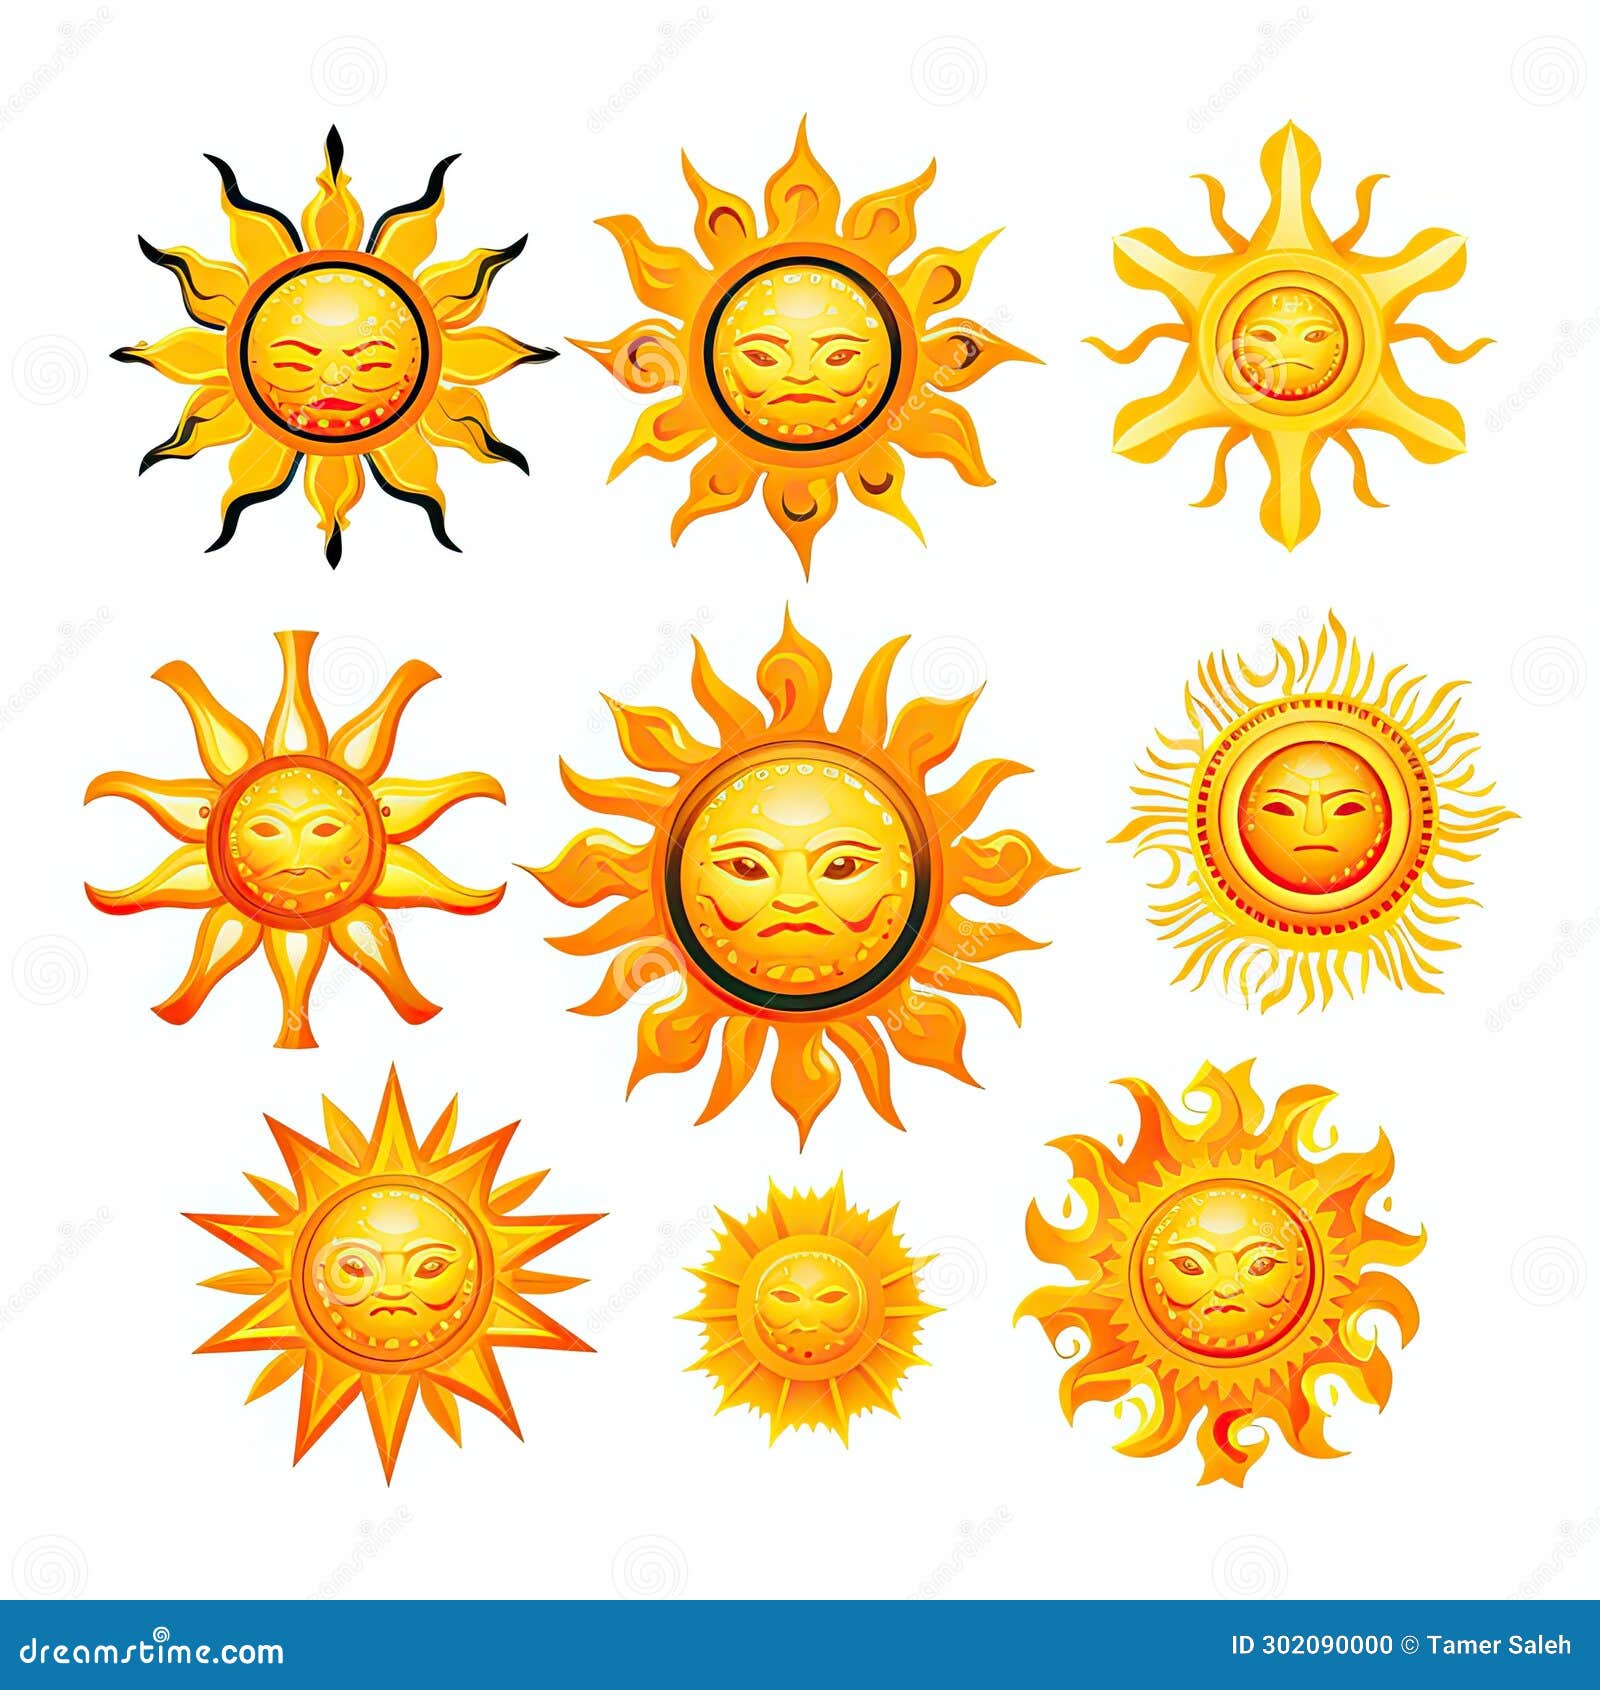 Sun clipart vector design stock illustration. Illustration of weather ...